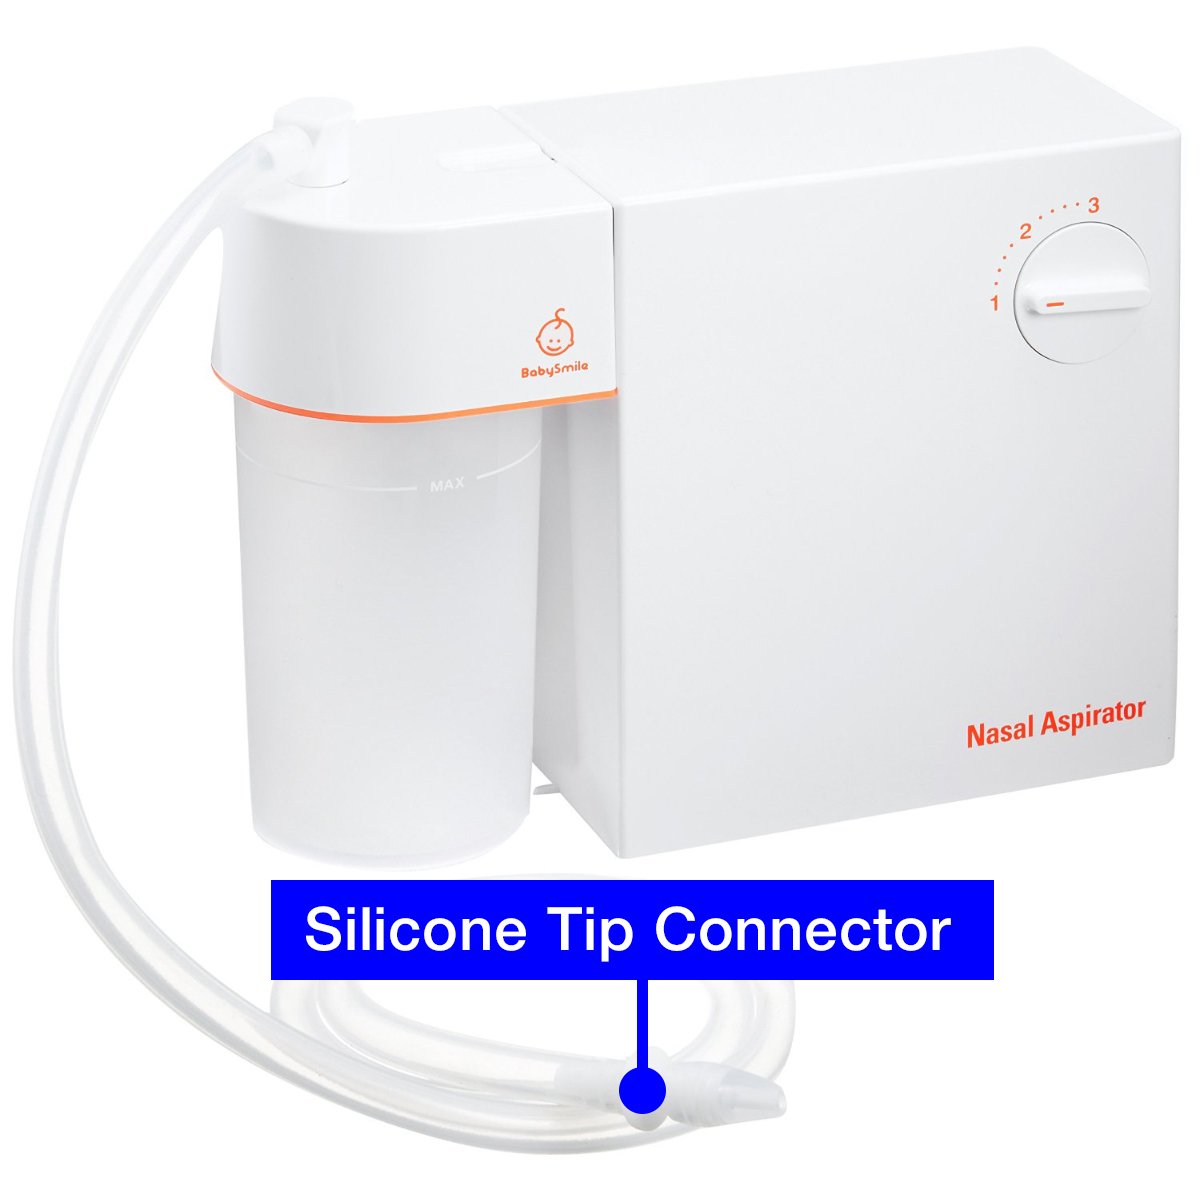 Silicone Tip Connector for BabySmile Nasal Aspirator S-502, S-503